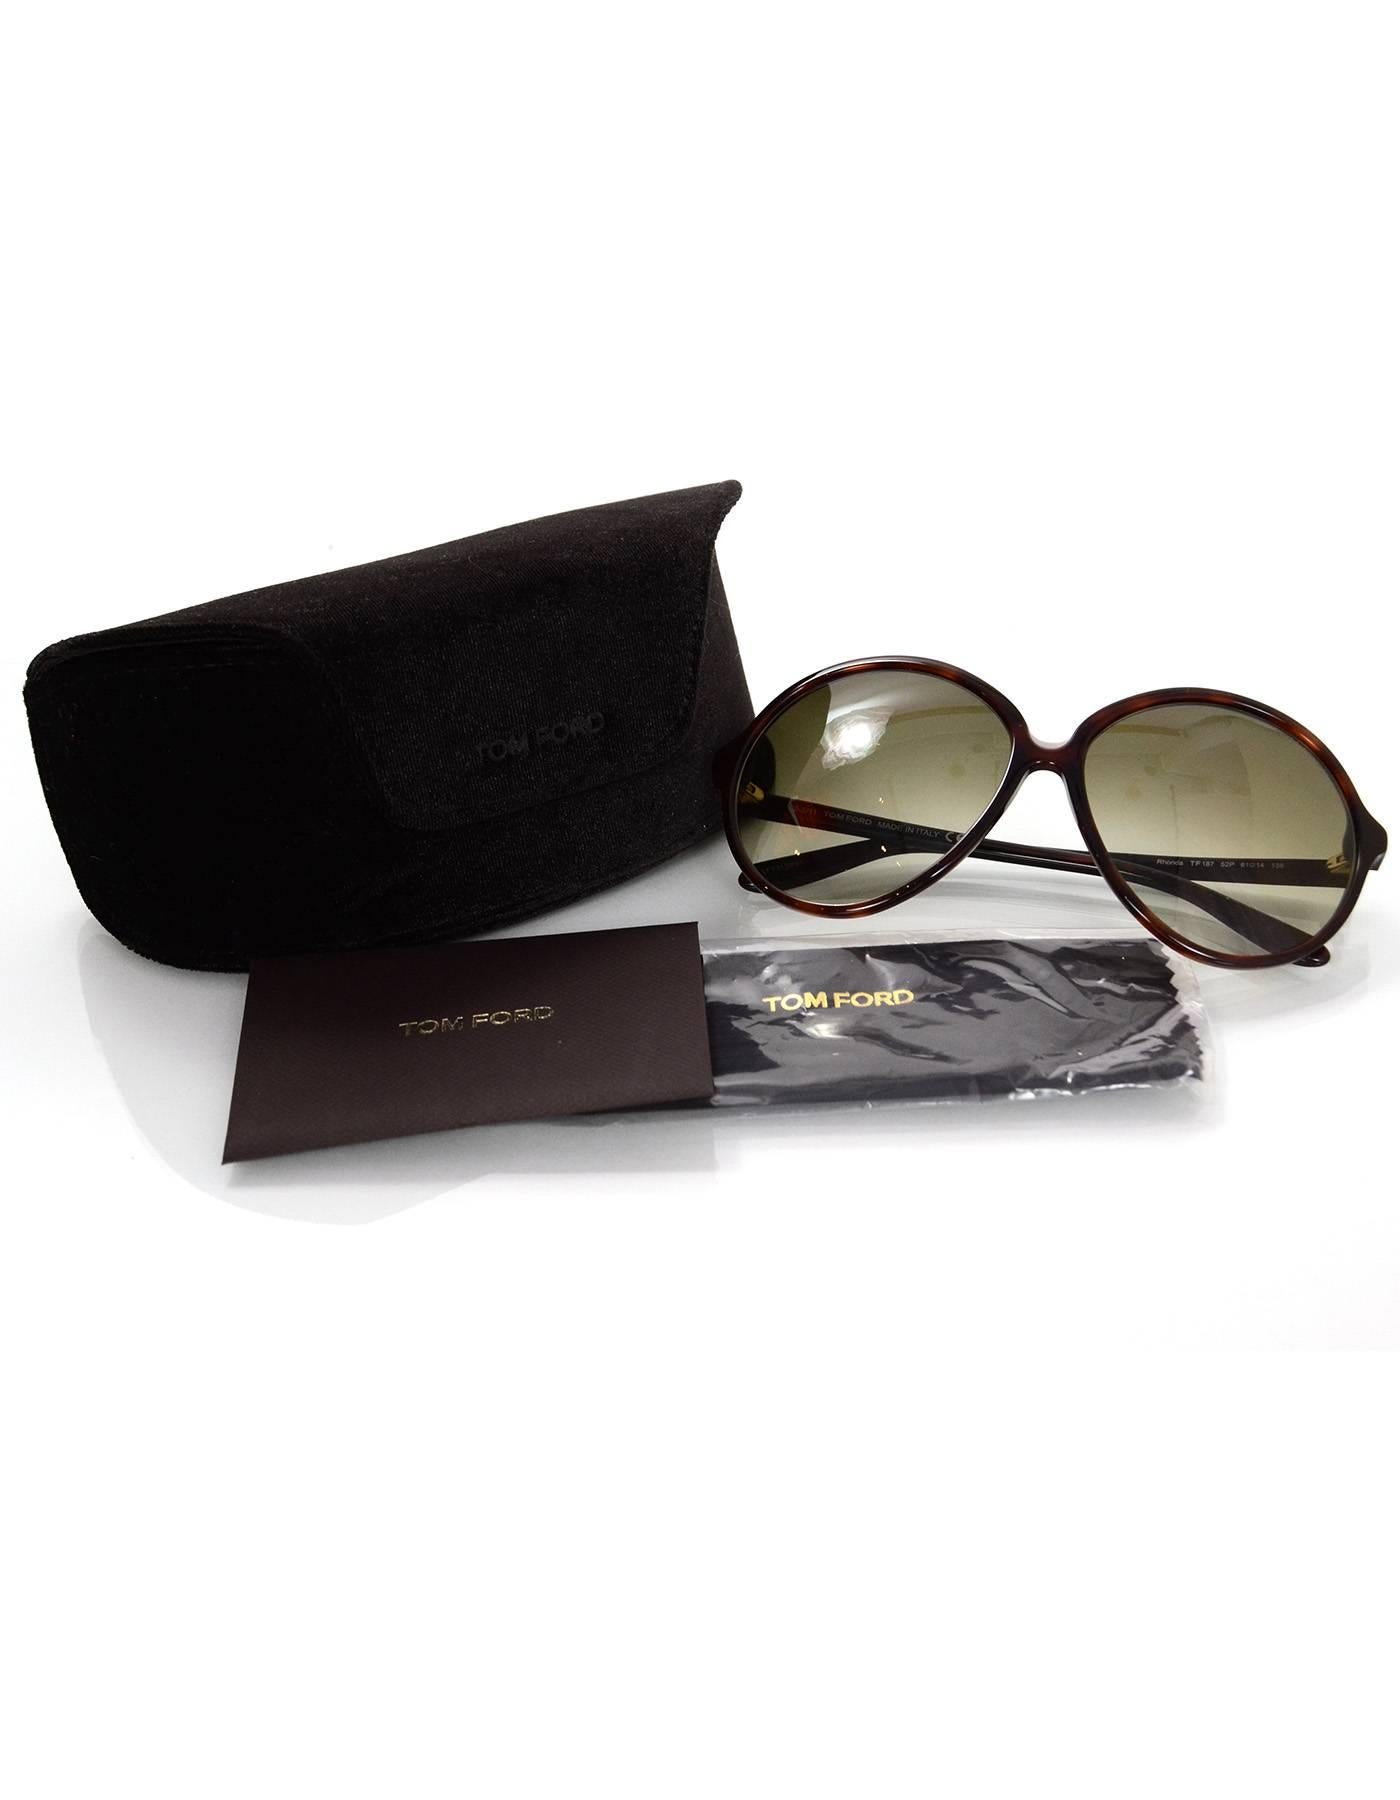 Tom Ford Tortoise Rhonda Round Frame Sunglasses with Case 2